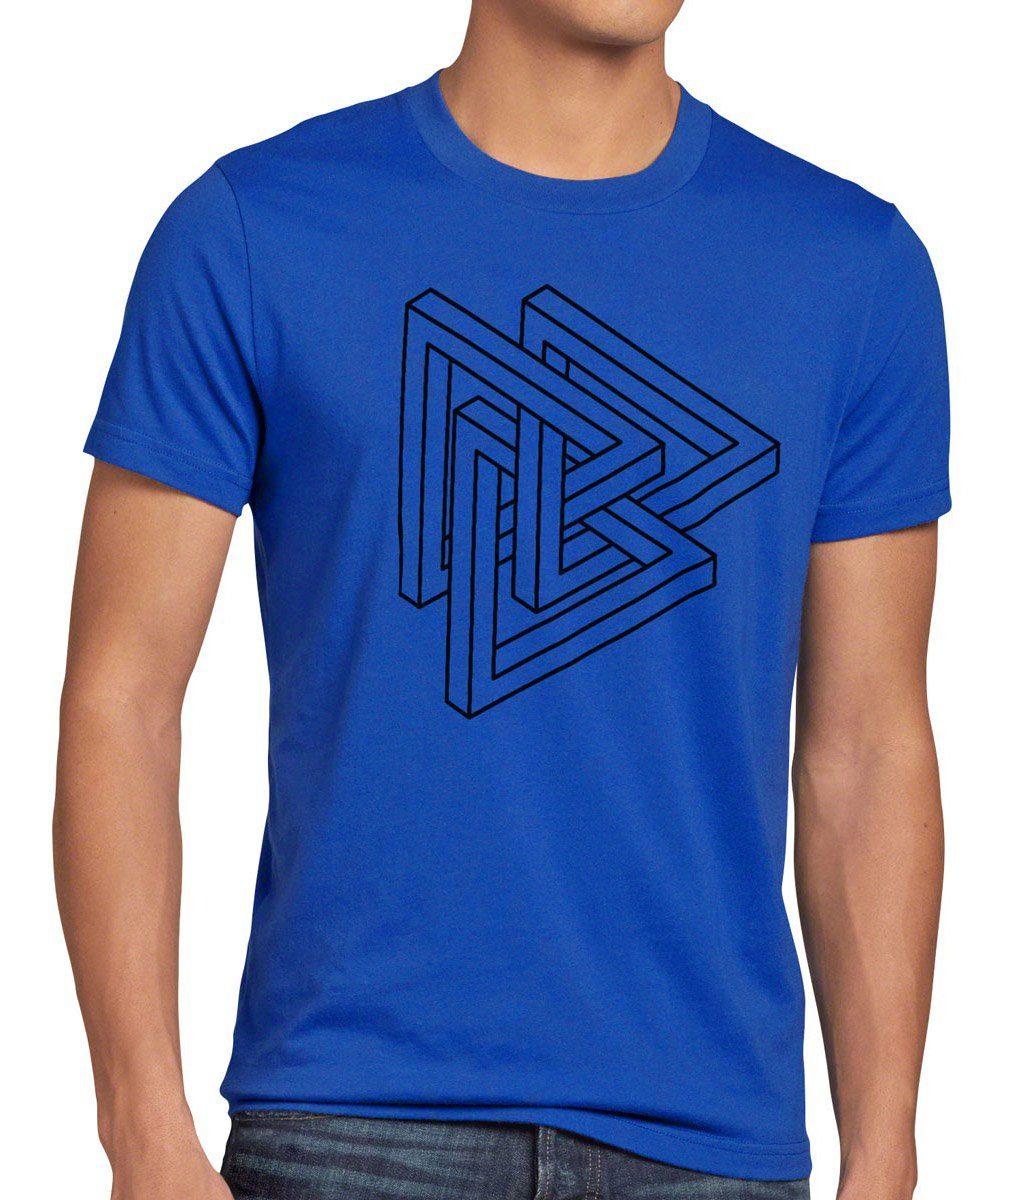 style3 Print-Shirt Herren T-Shirt Penrose Würfel Sheldon Dreieck geo blau Theory Cooper Bang Escher Big